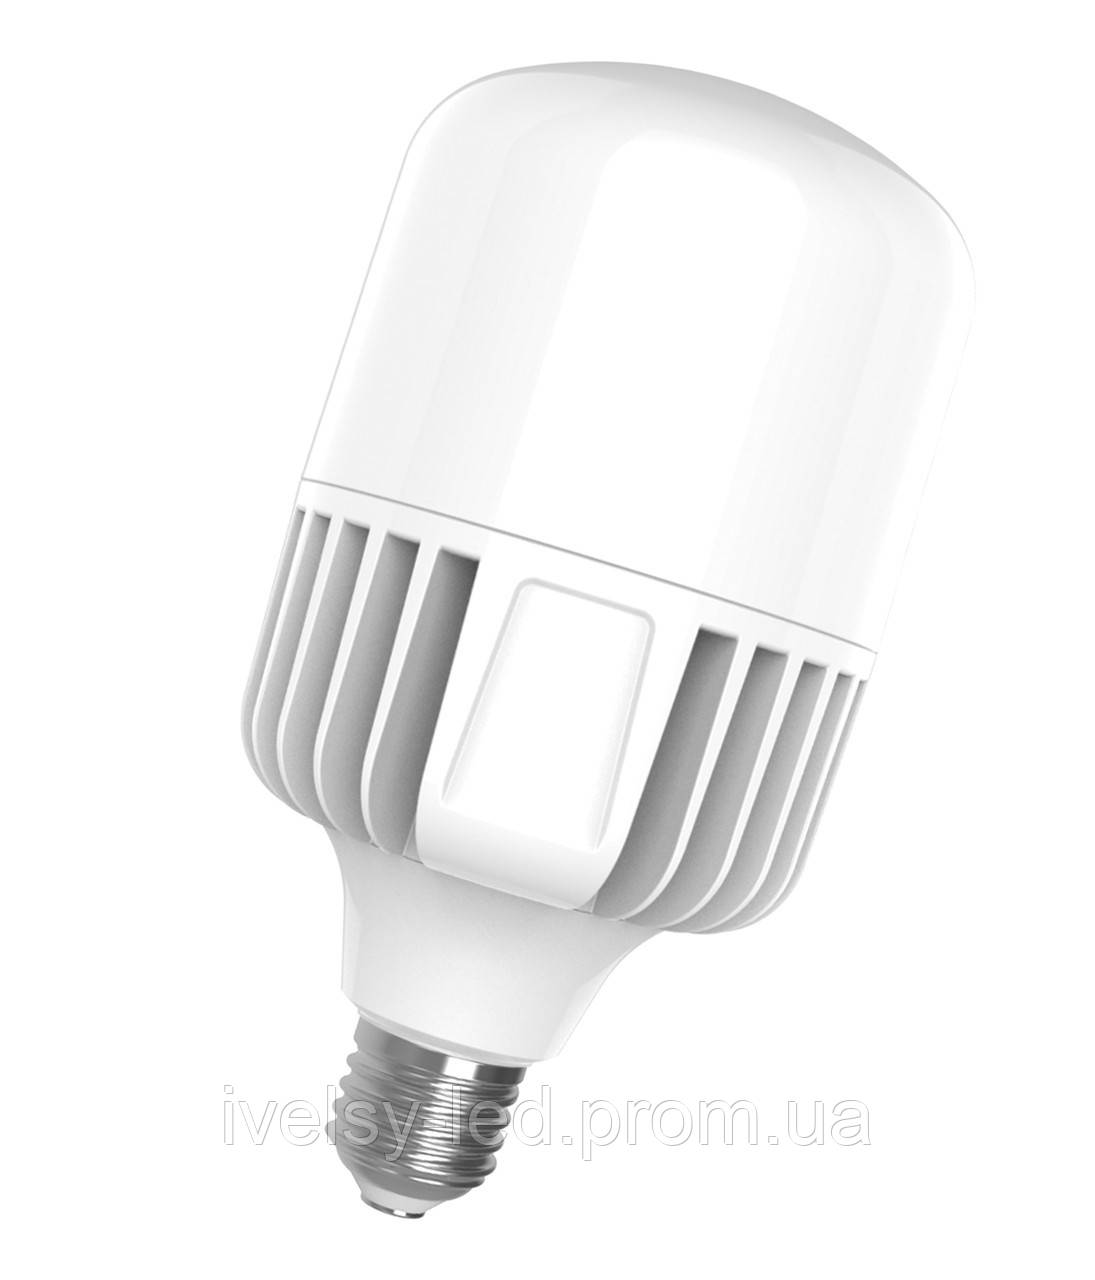 LED Лампа EUROLAMP высокомощная 100W E40 6500K. | "ООО "ИВЕЛСИ""